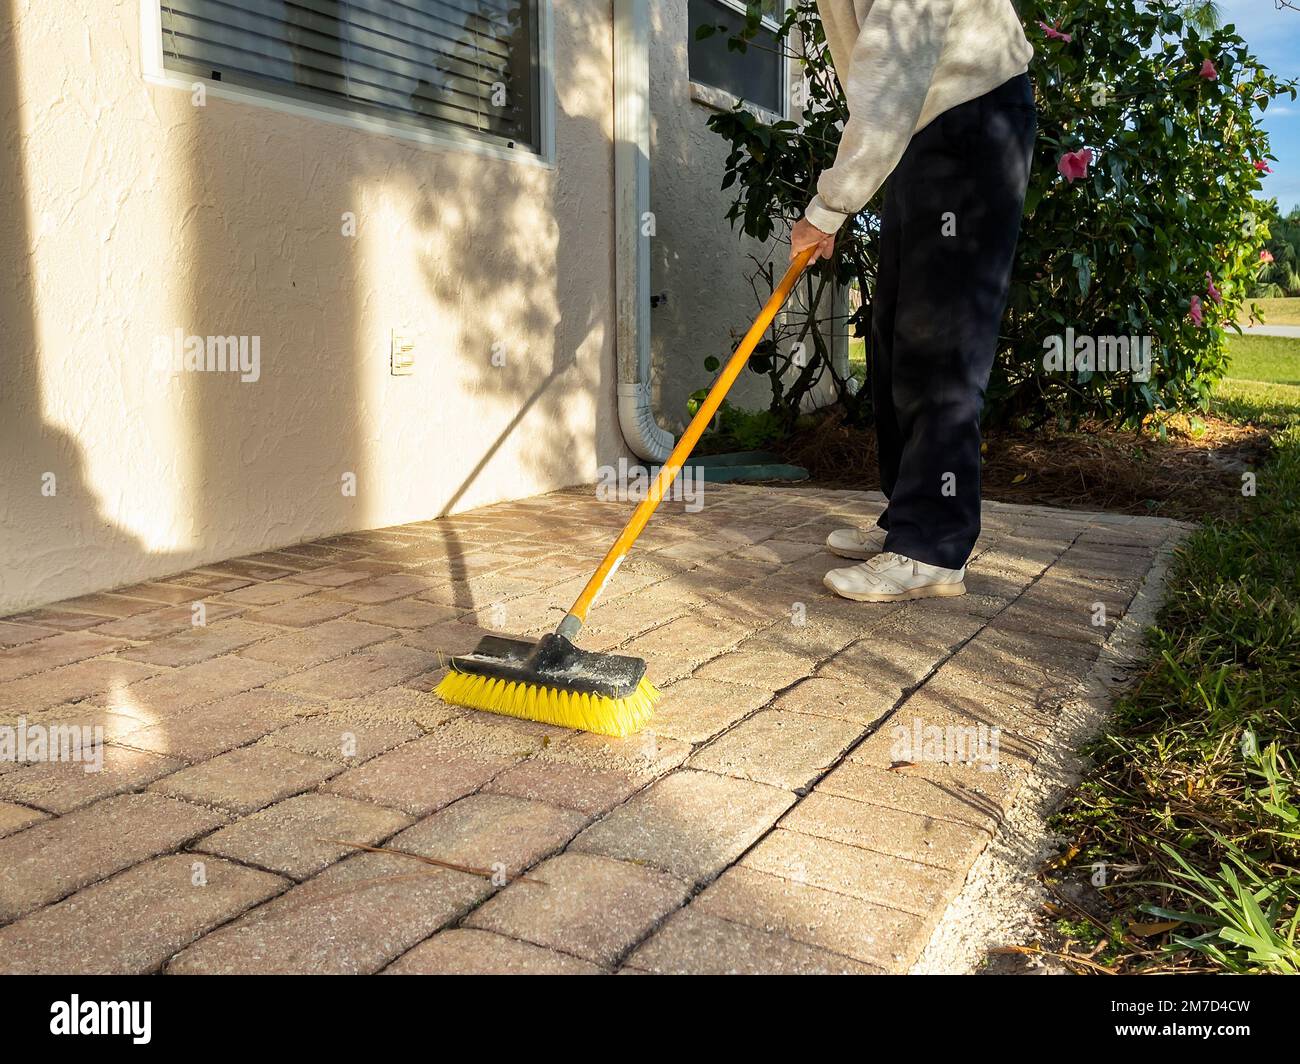 Man sweeping brick paver stone porch with push broom. Stock Photo